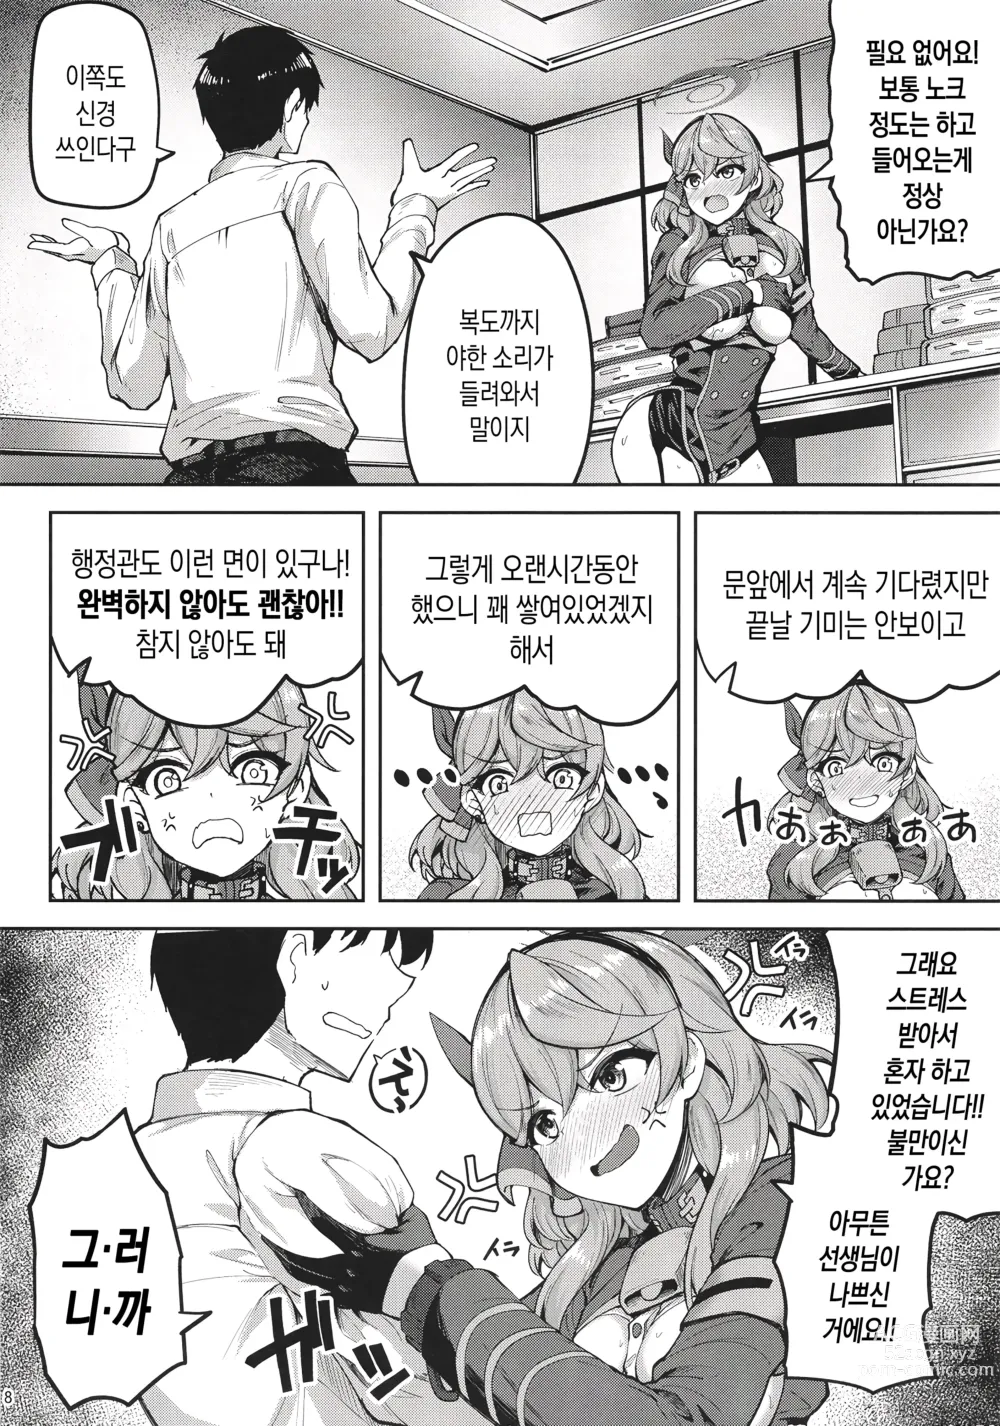 Page 7 of doujinshi 선생님 진심인가요!? 2